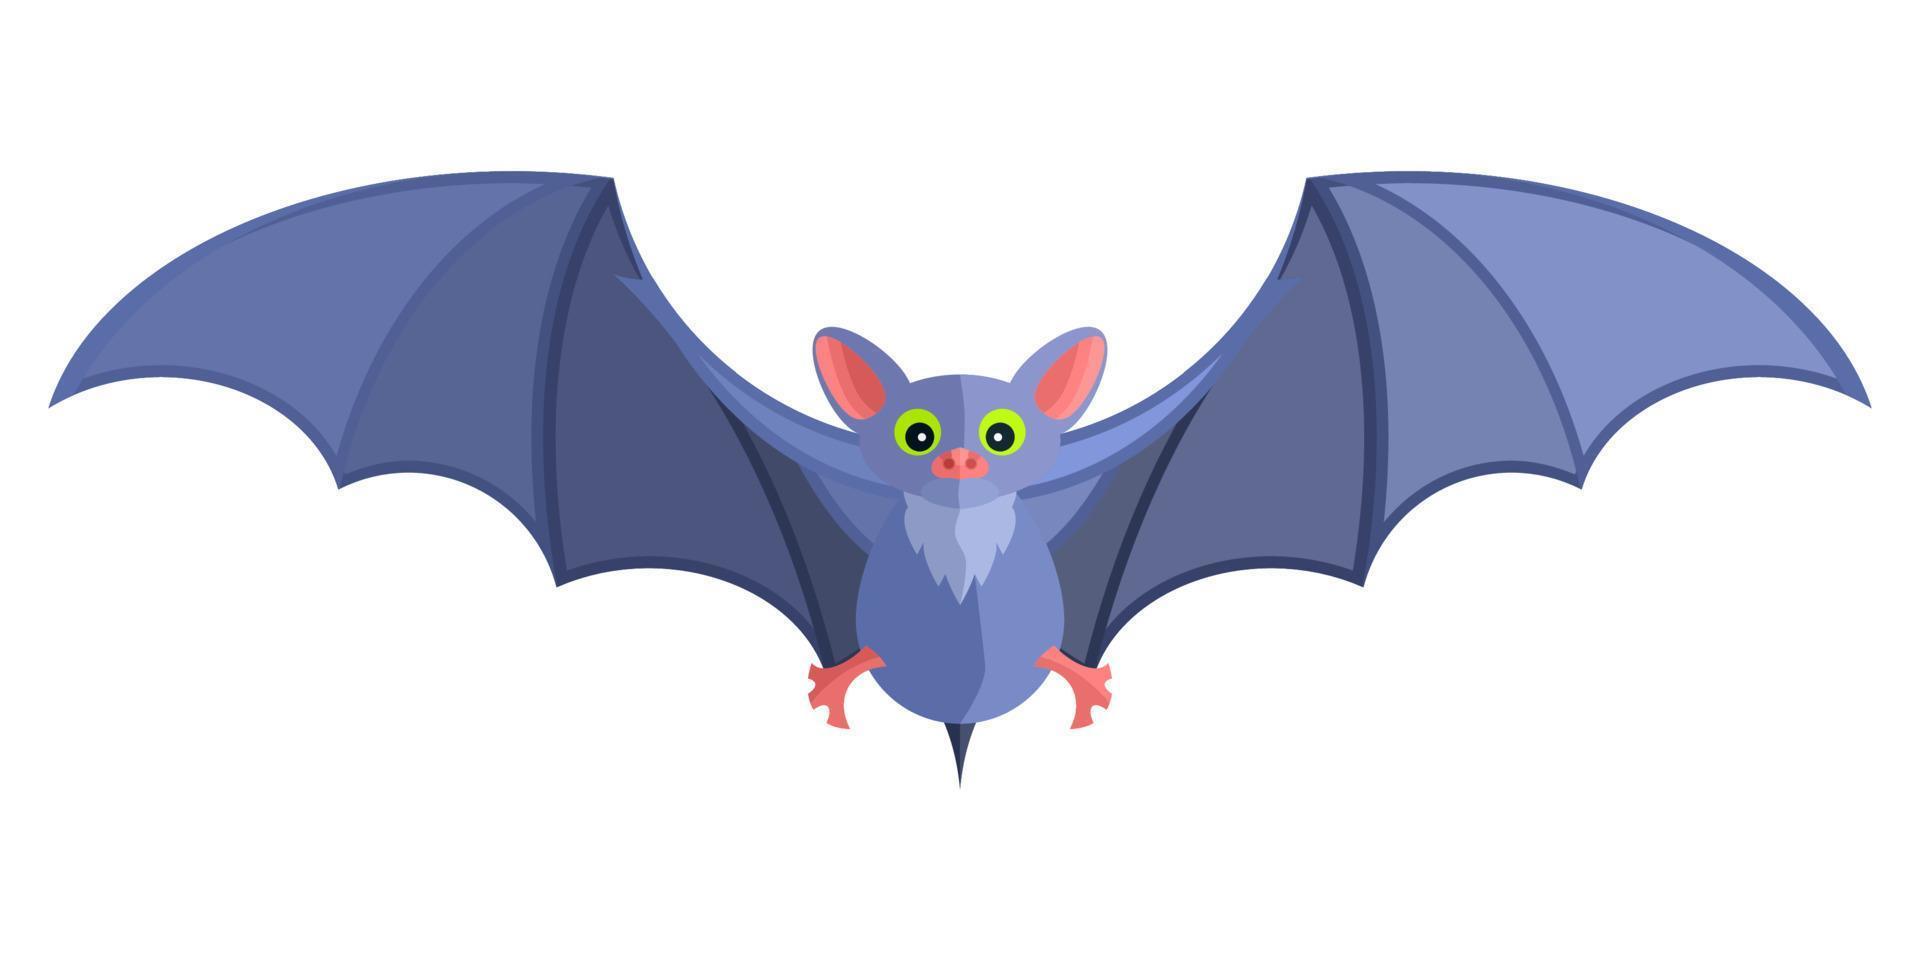 blue cartoon bat bright flat mystical fairy. Stock image vector